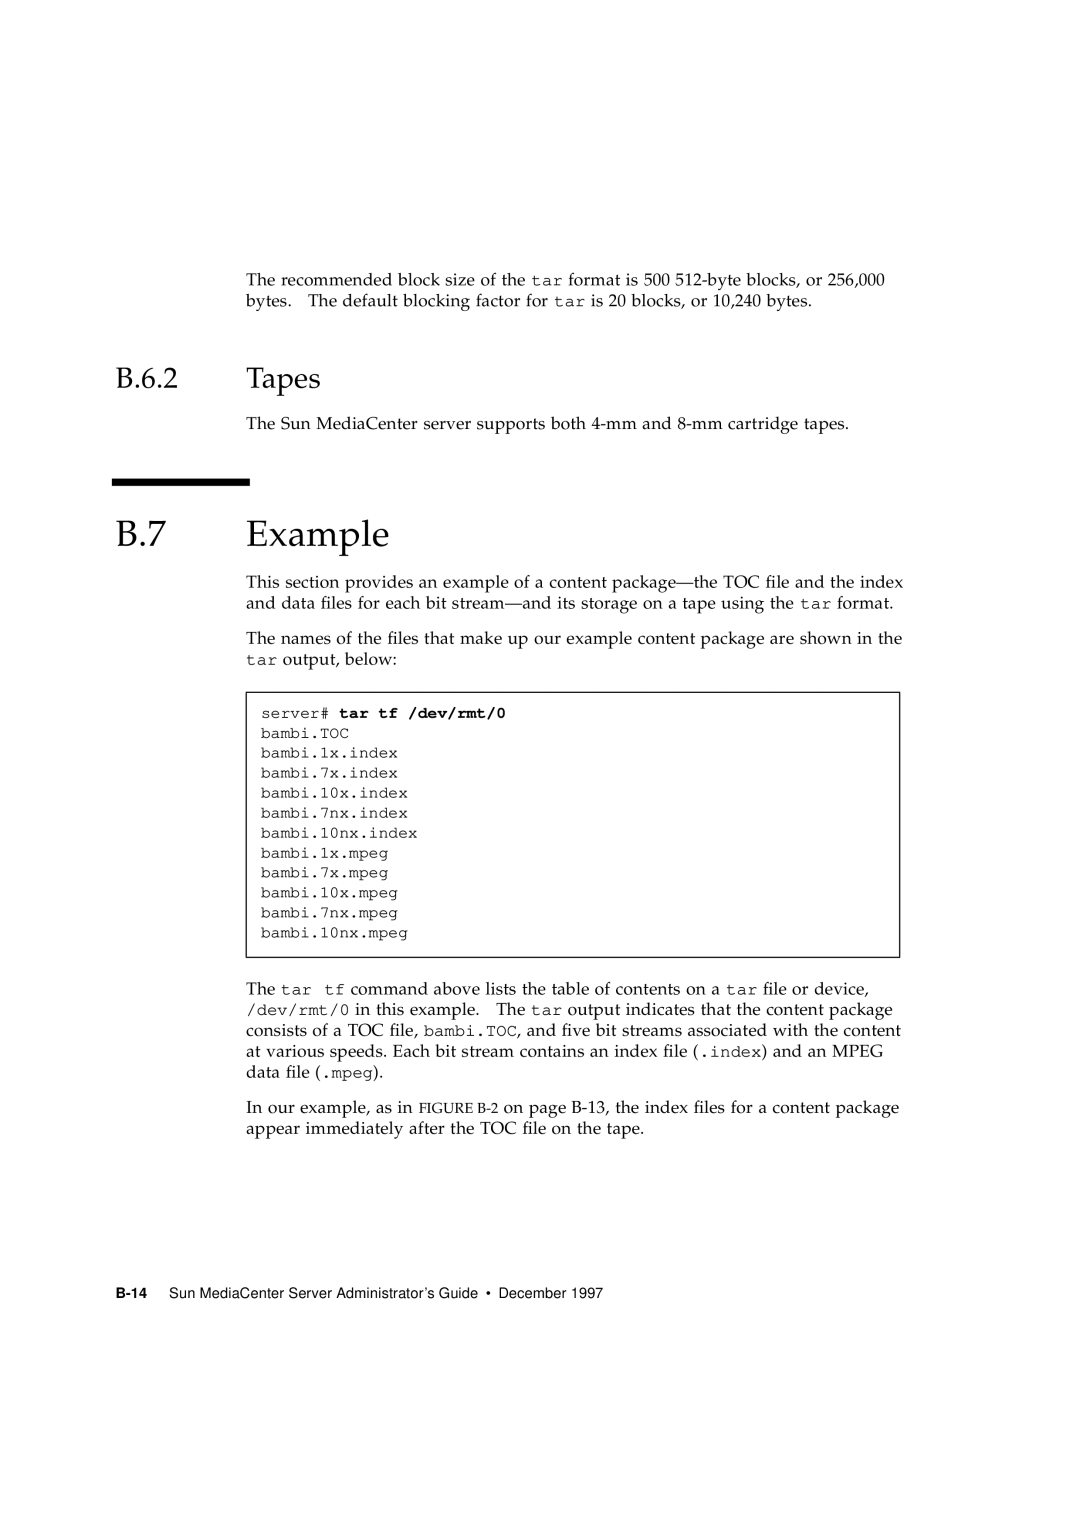 Sun Microsystems 2.1 manual B.7 Example, B.6.2 Tapes 